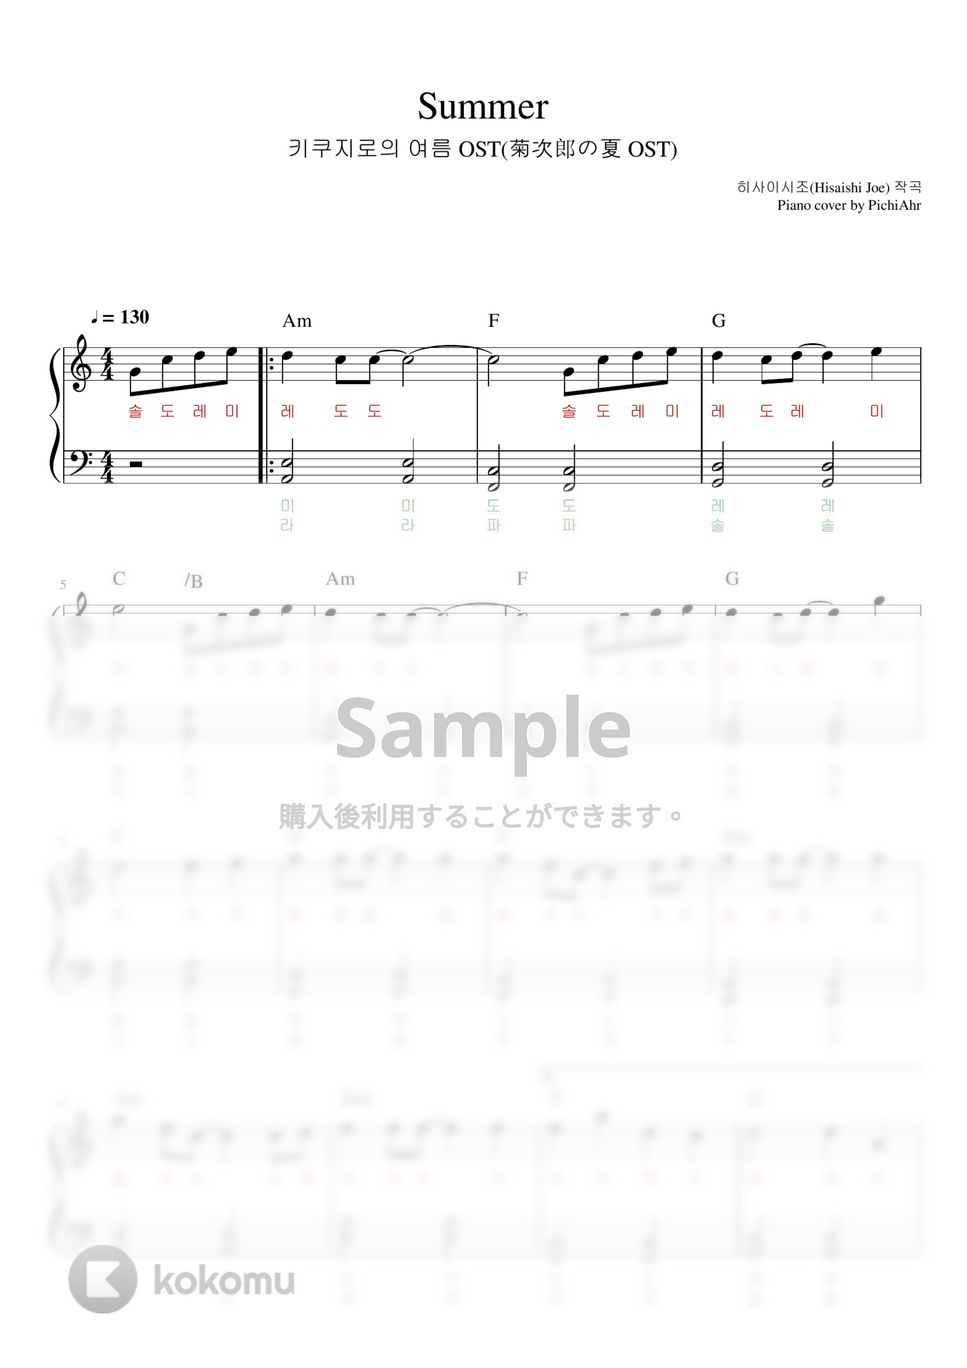 Joe Hisaishi - Summer(菊次郎の夏 OST) (easy ver.) by Pichi Ahr